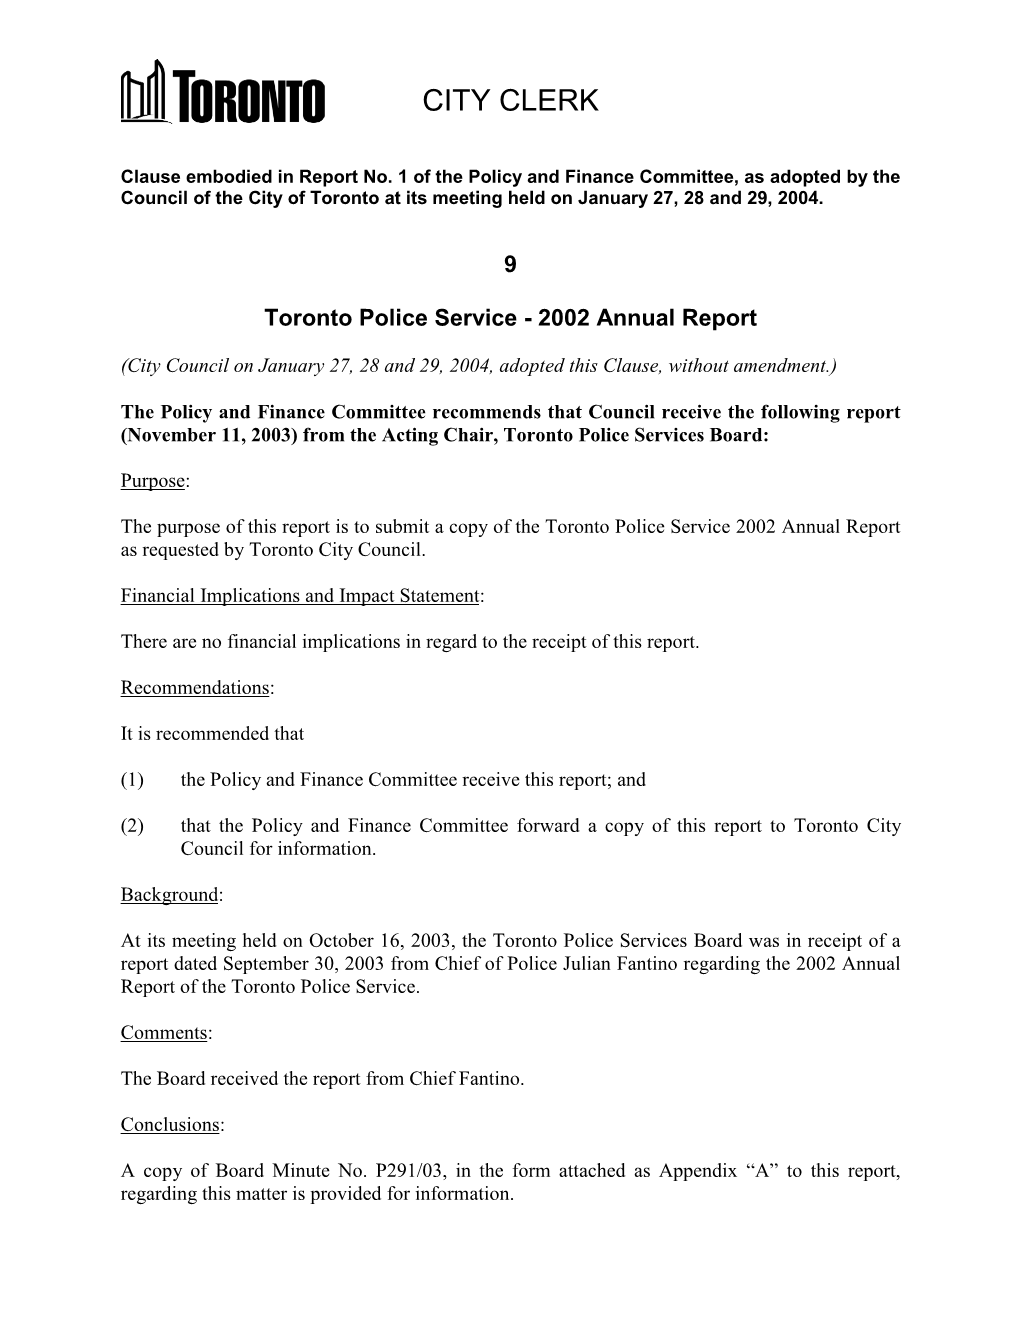 Toronto Police Service - 2002 Annual Report